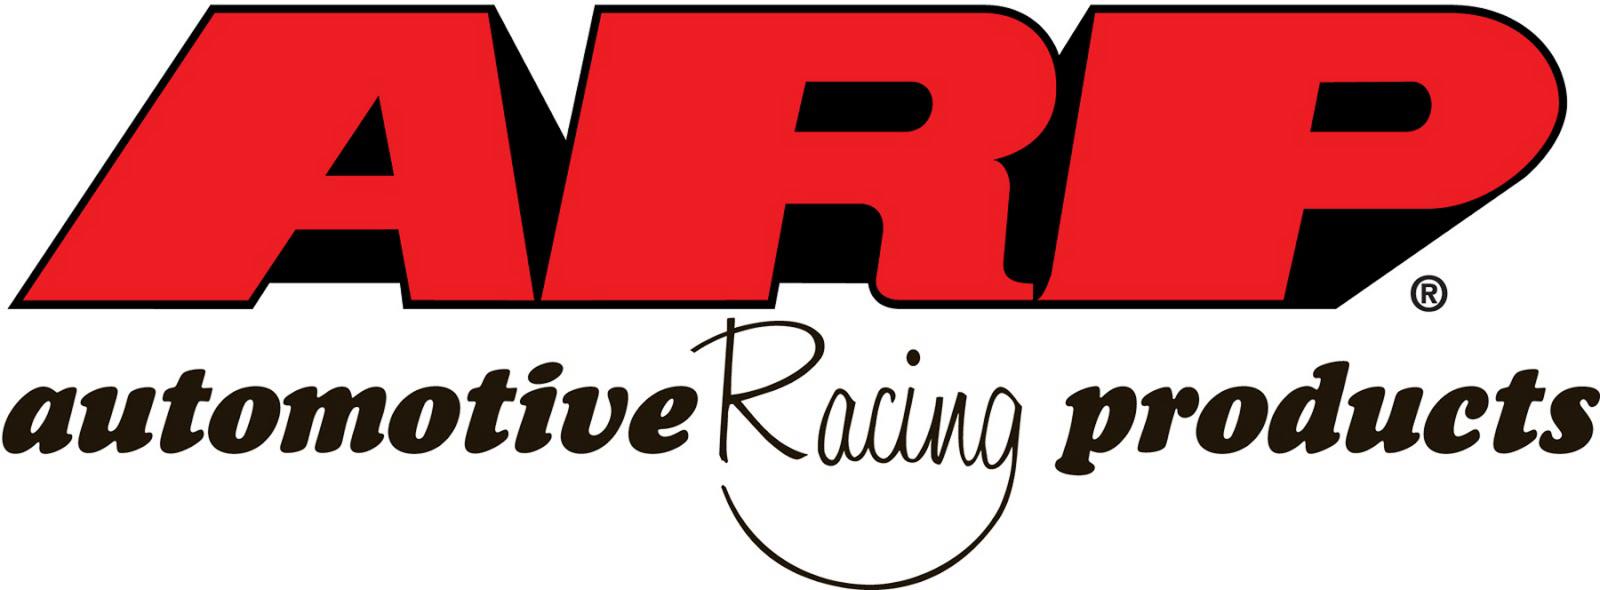 Automotive Racing Logo - ARP Automotive Racing Products - Autosport International 2019 - 10th ...